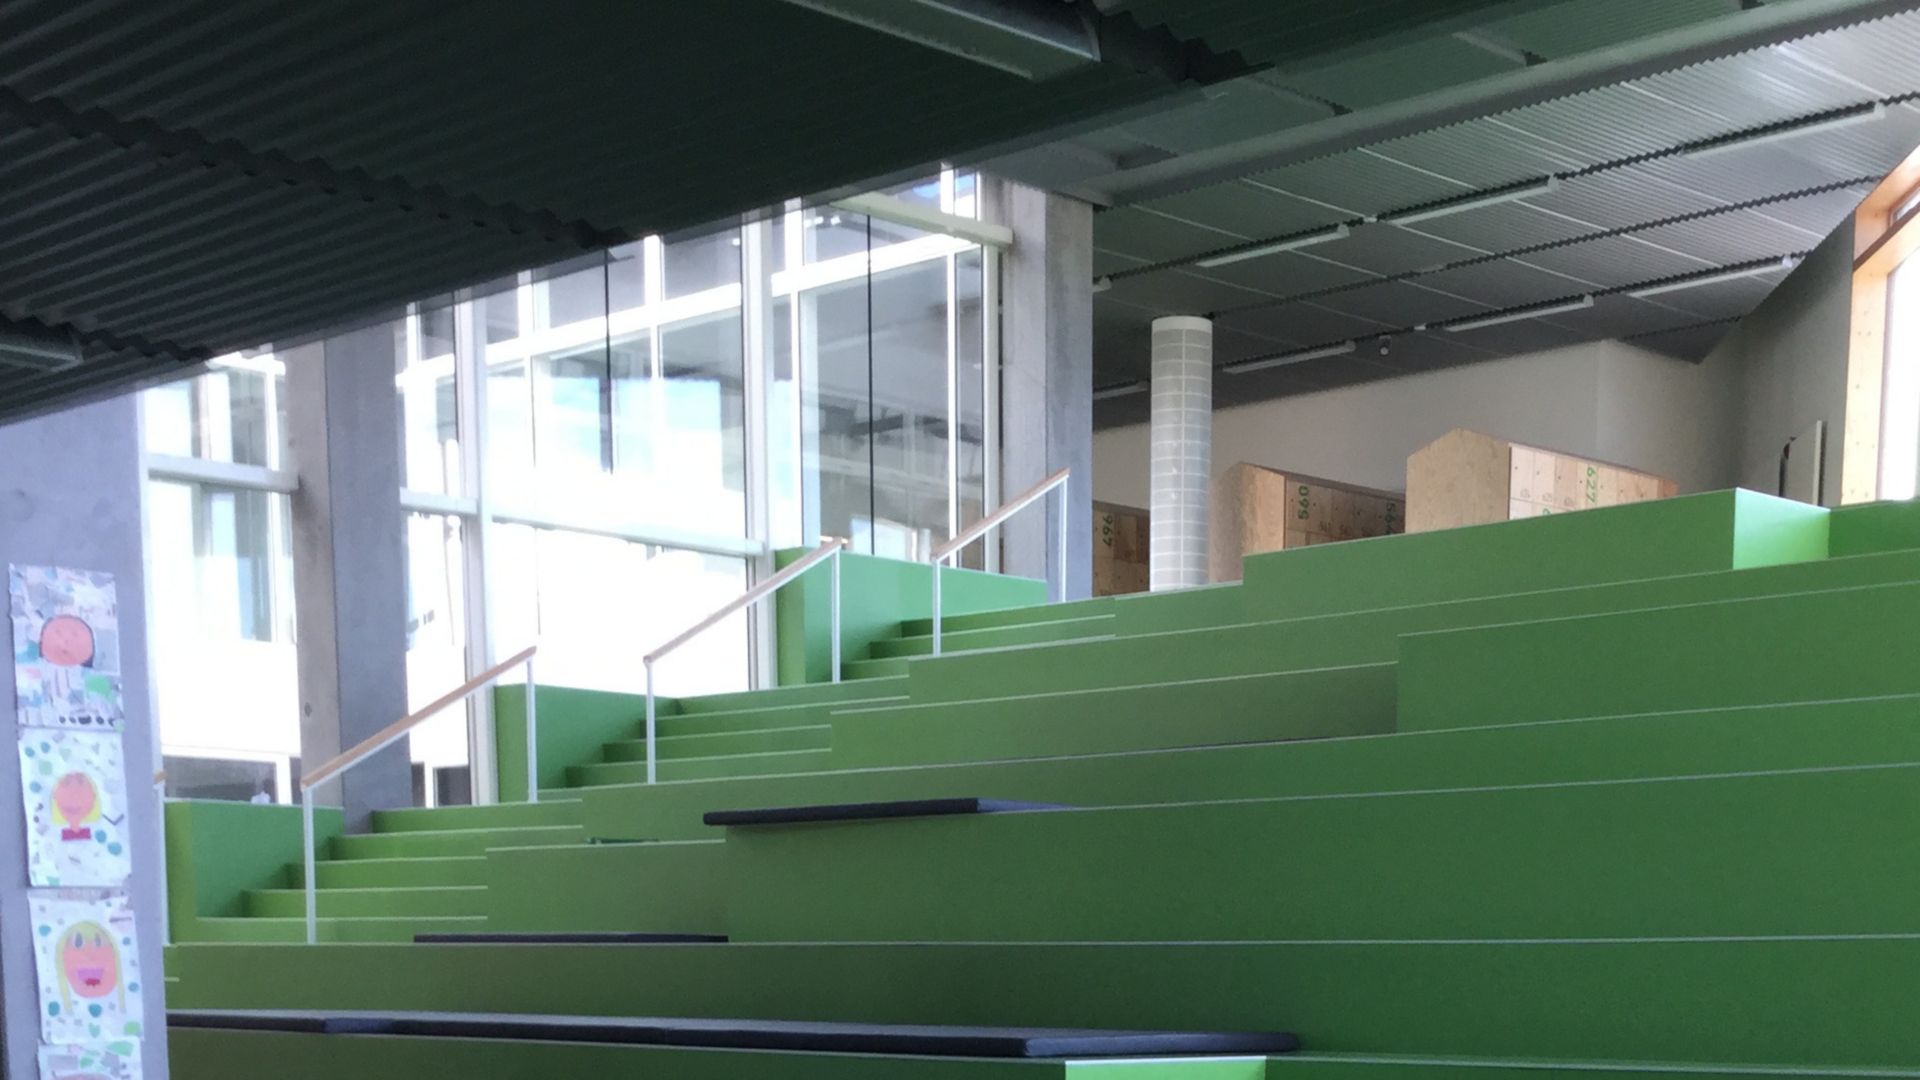 Sika ComfortFloor® green floor at school stairs